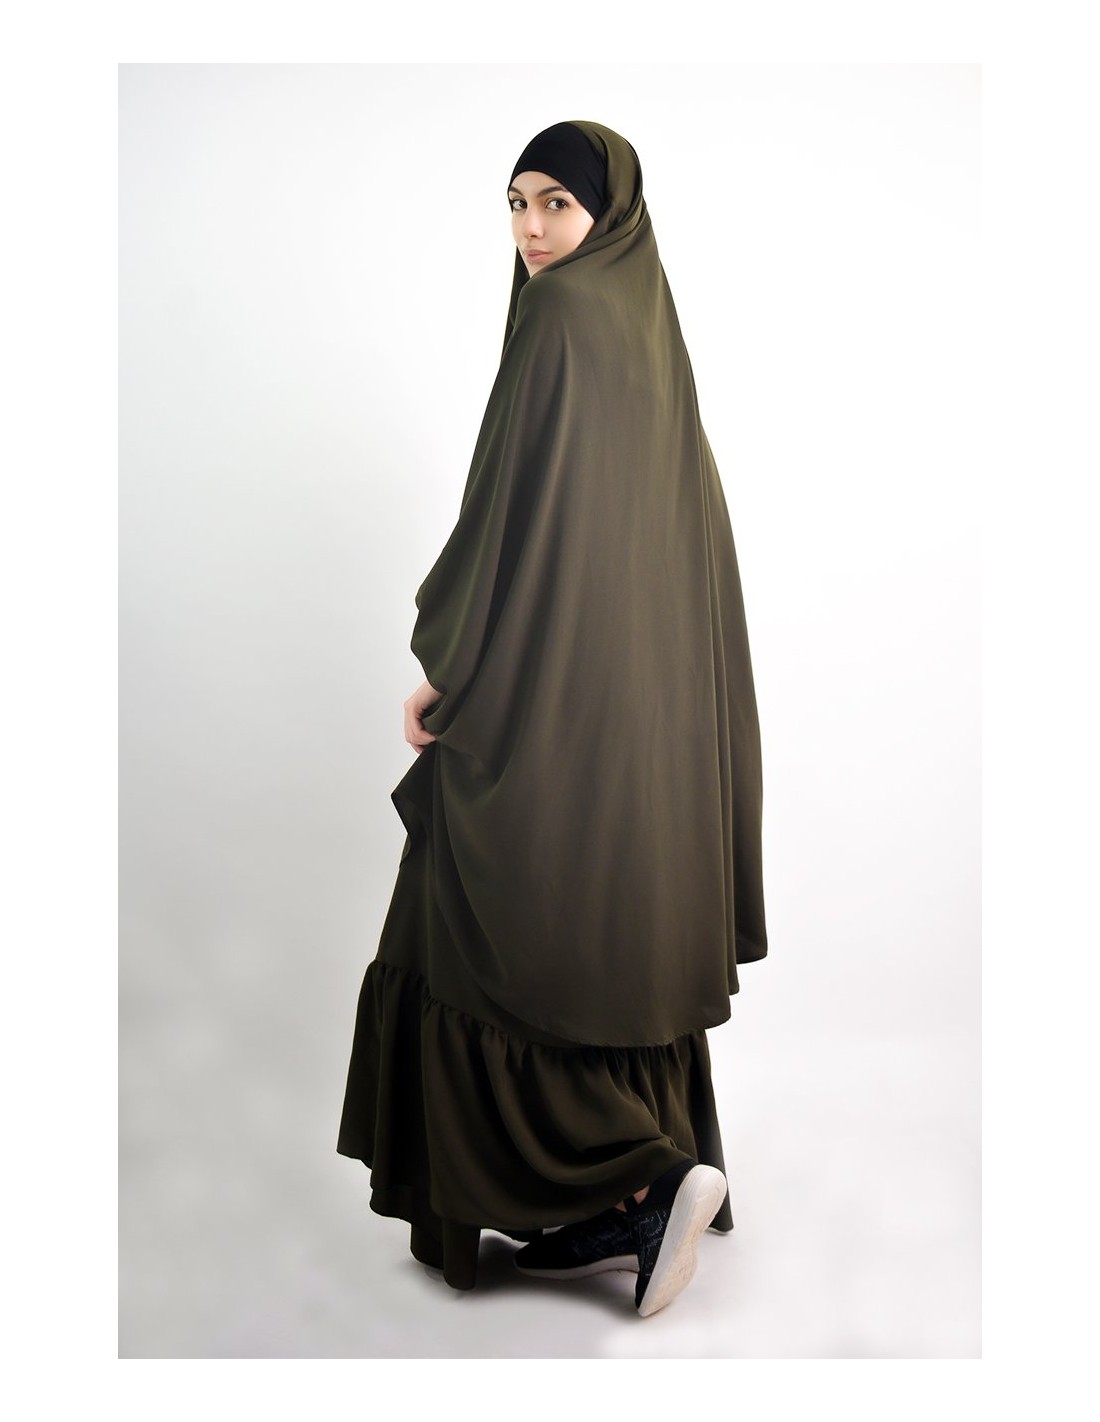 Jilbab al baida mit Stirnrunzeln